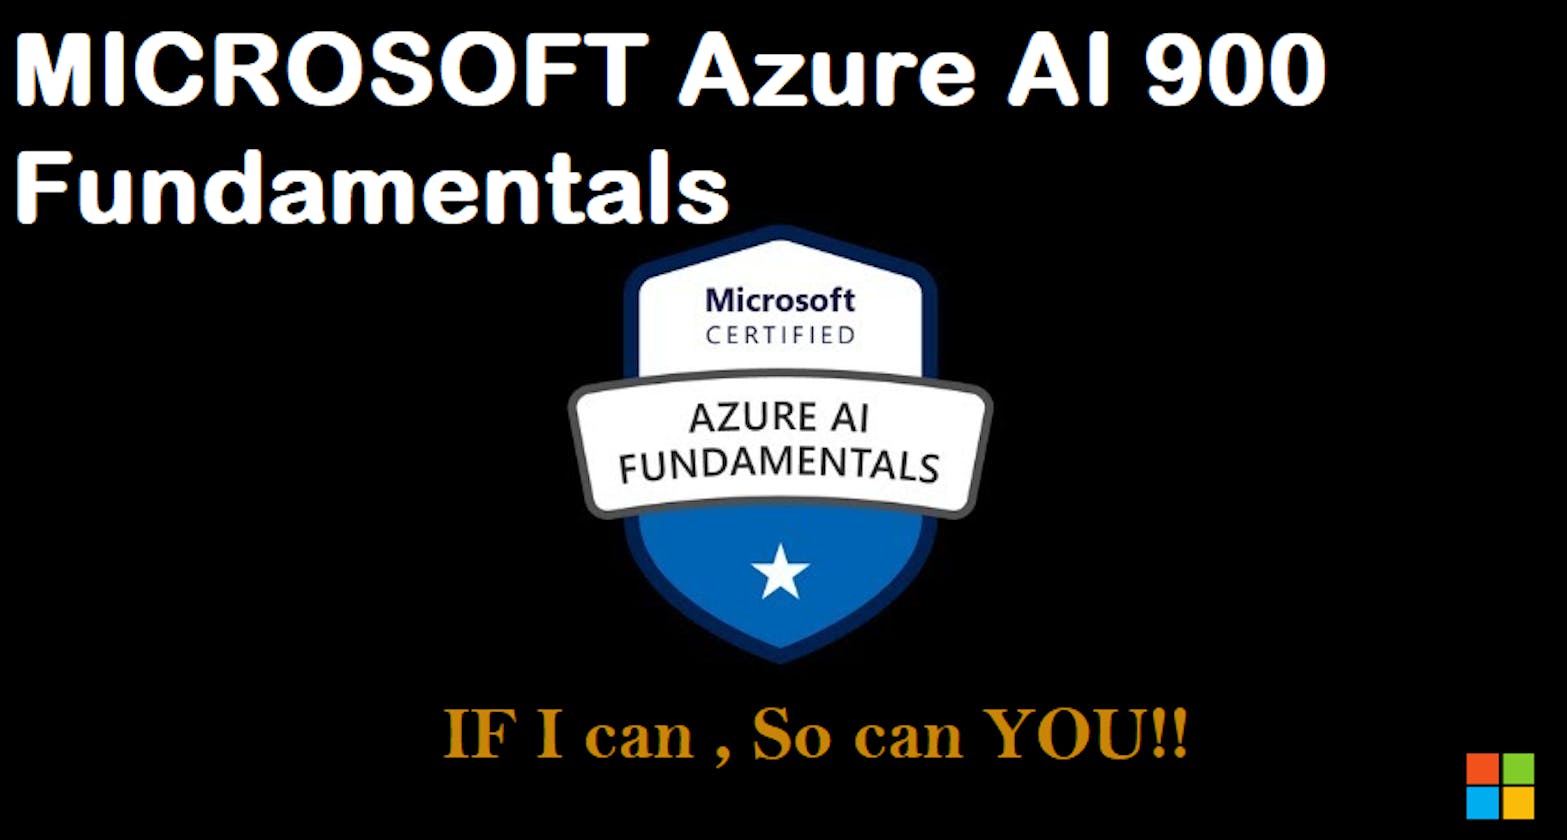 Microsoft Azure AI Fundamentals AI-900: How to Prepare and Pass the Exam